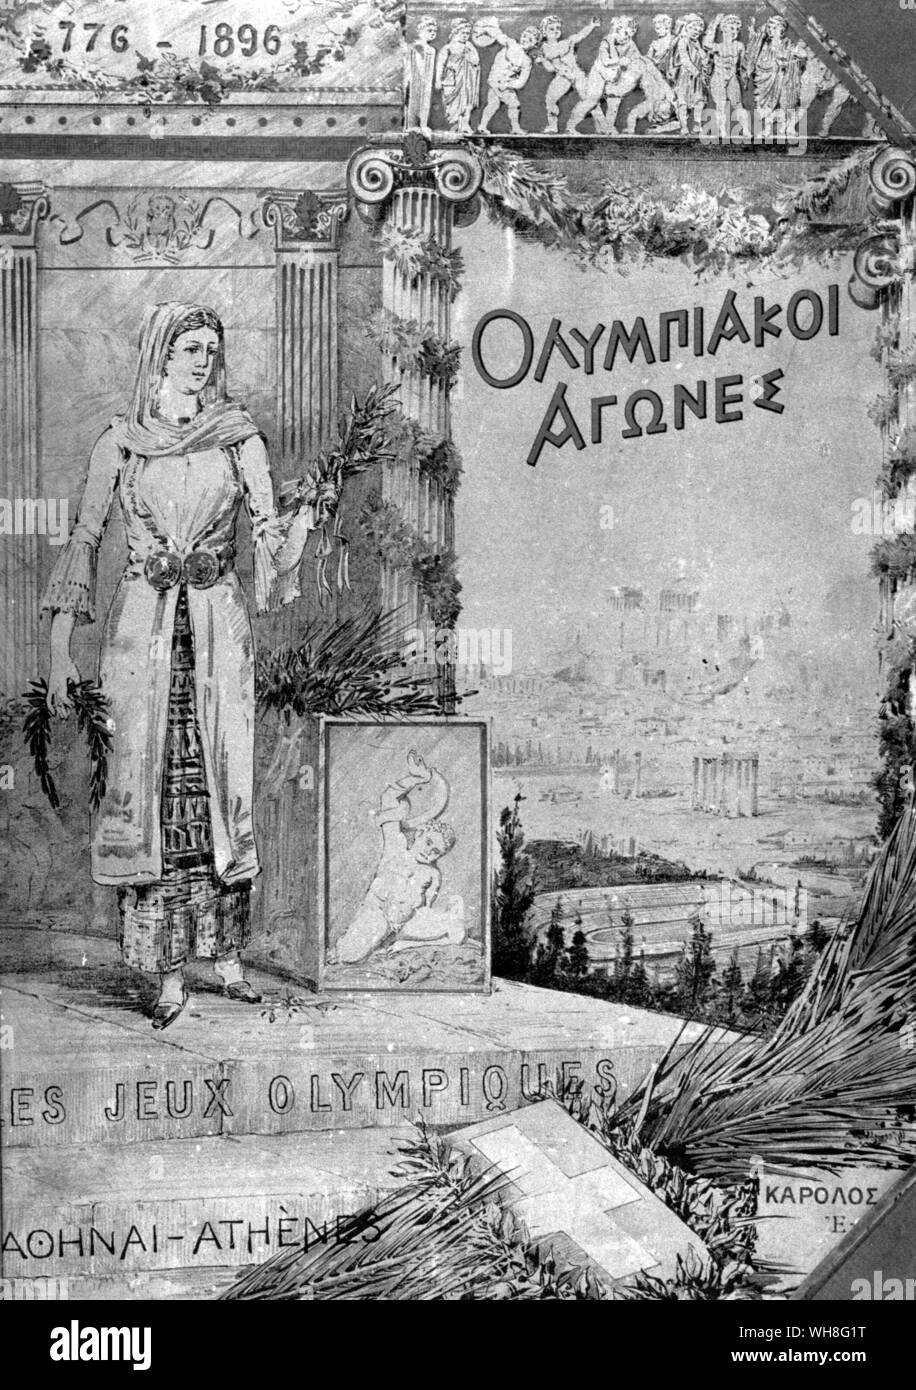 Les Jeux Grand Ski (Olympische Spiele) Programm für die Olympischen Spiele 1896 in Athen. Die Olympischen Spiele Seite 25. Stockfoto